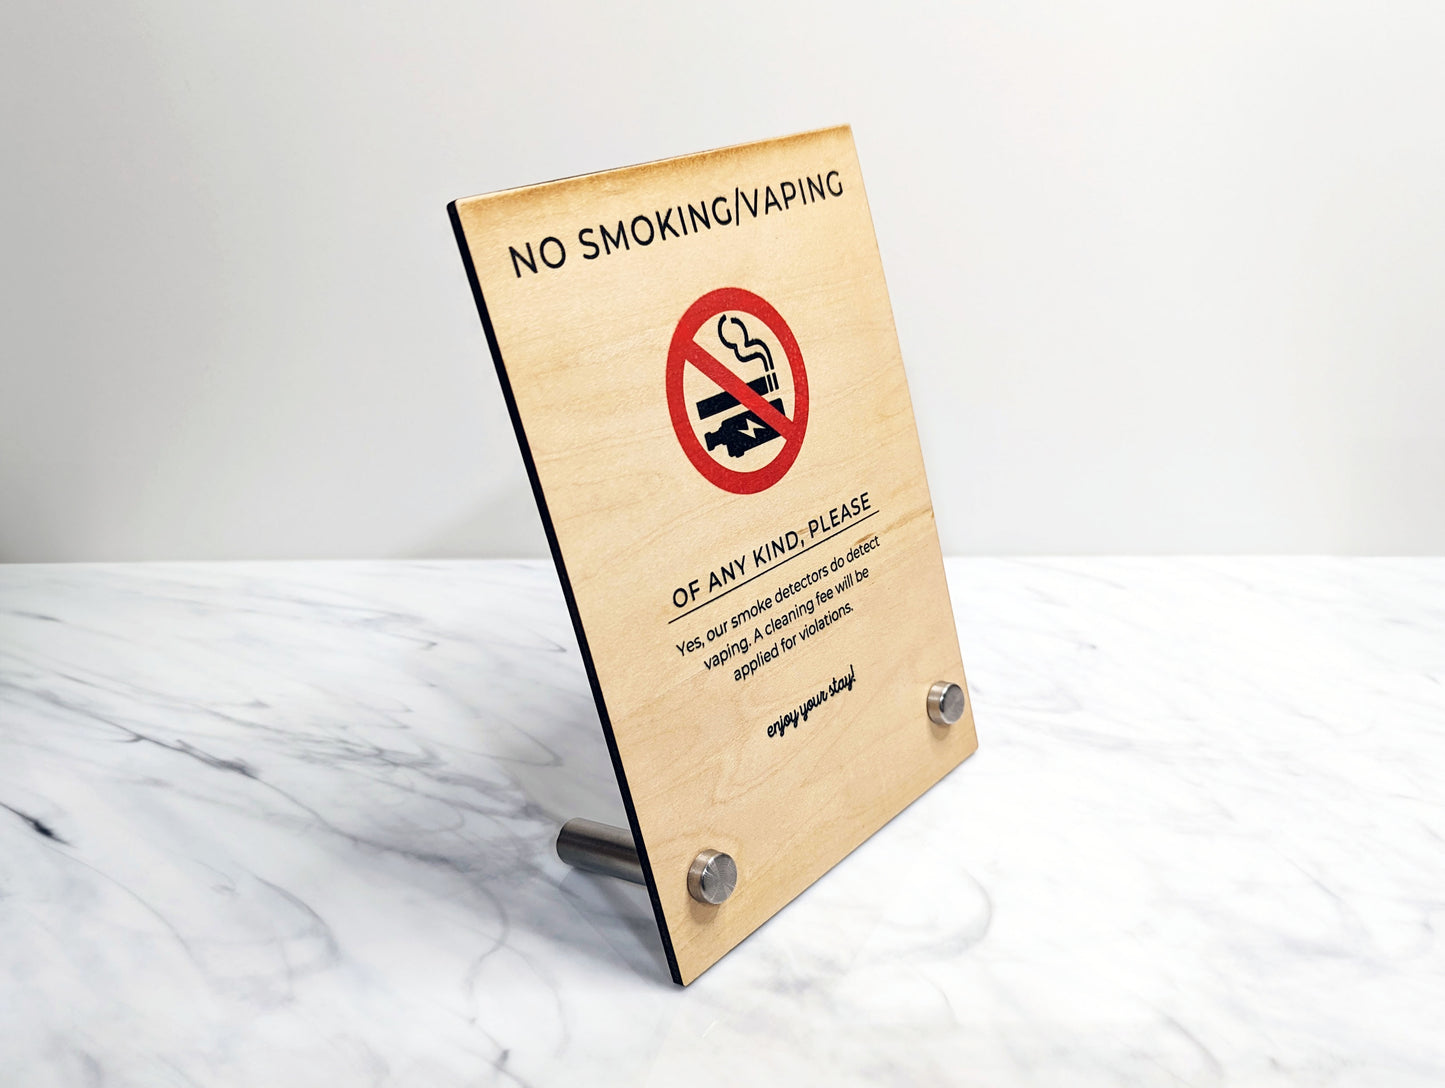 No Smoking or Vaping 5x7" Wood Sign